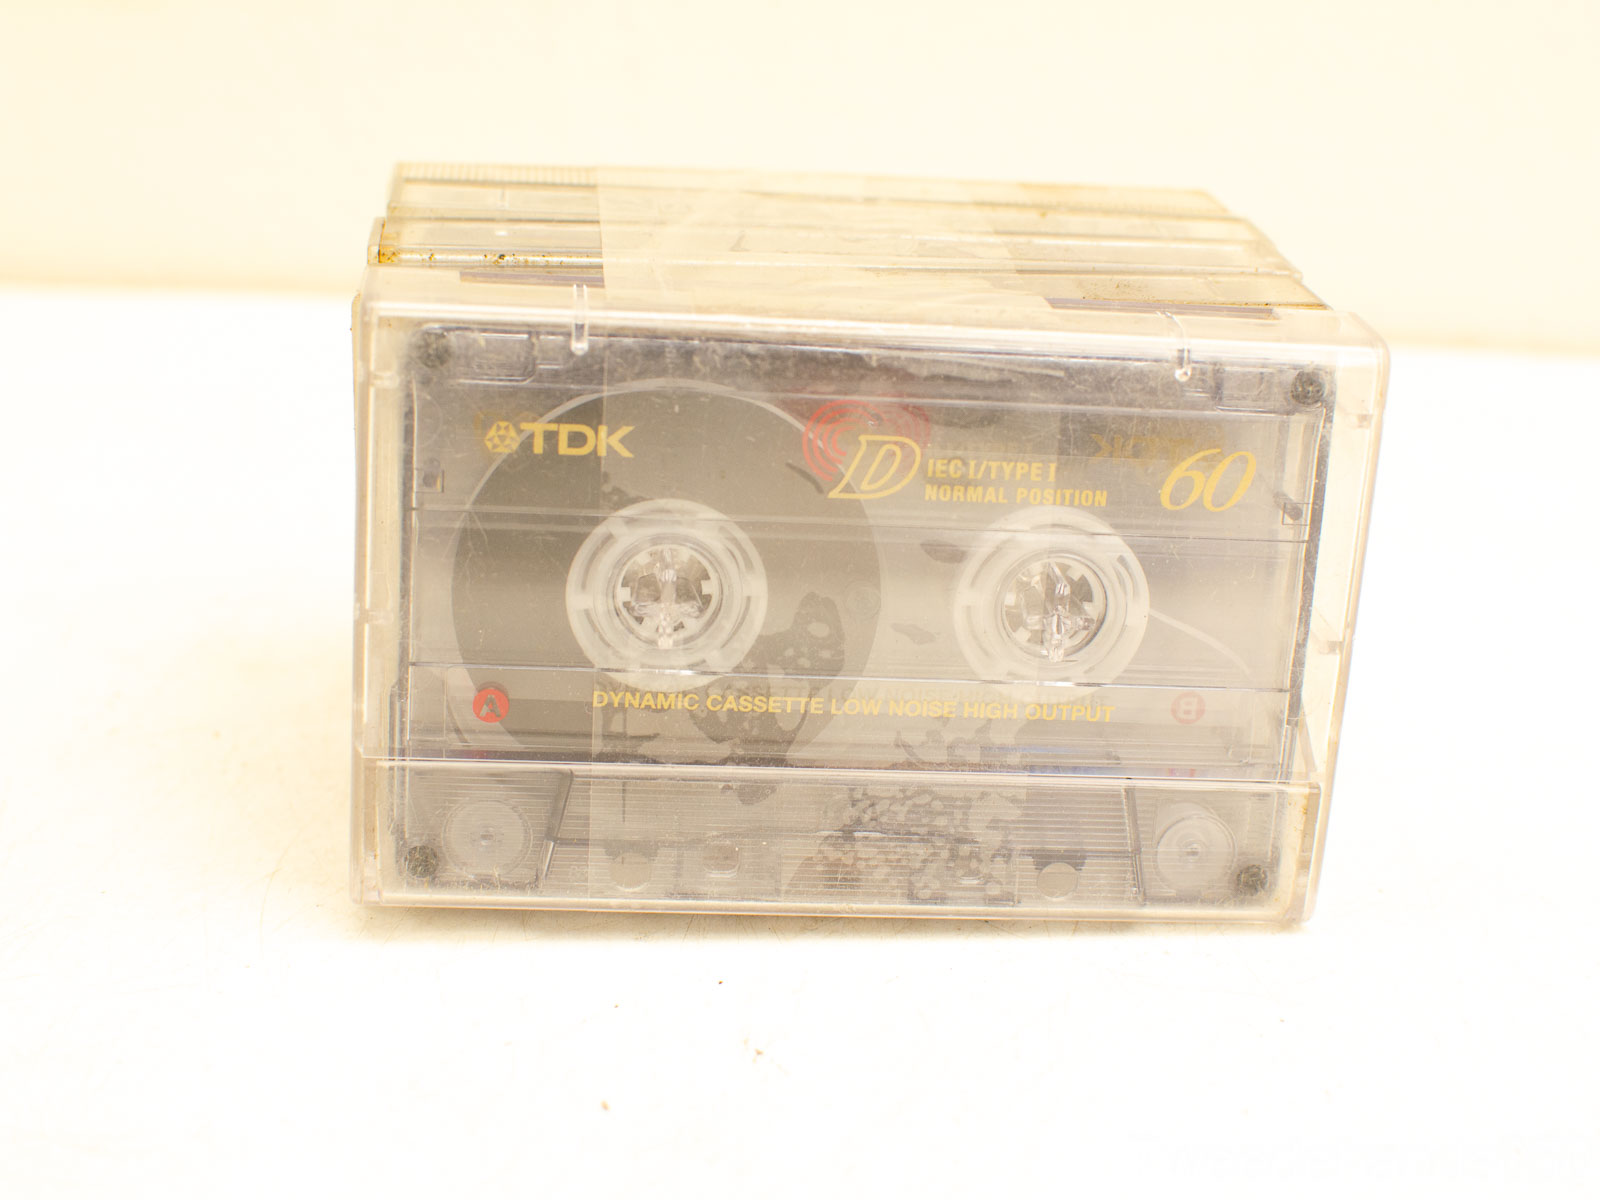 5 Tdk cassettebandjes 31363